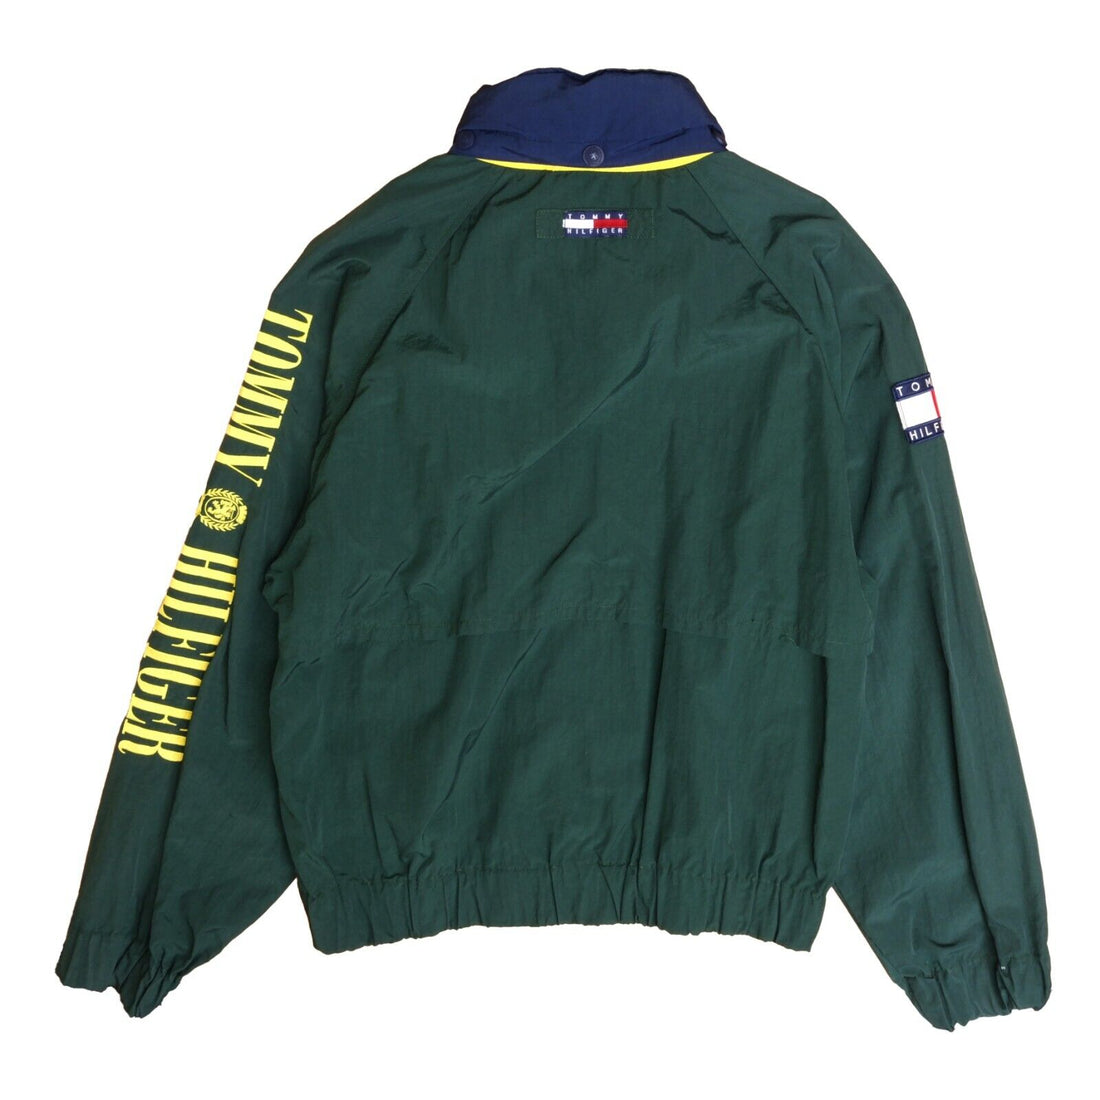 Vintage Tommy Hilfiger Light Jacket Size Large Green Sleeve Spell Out